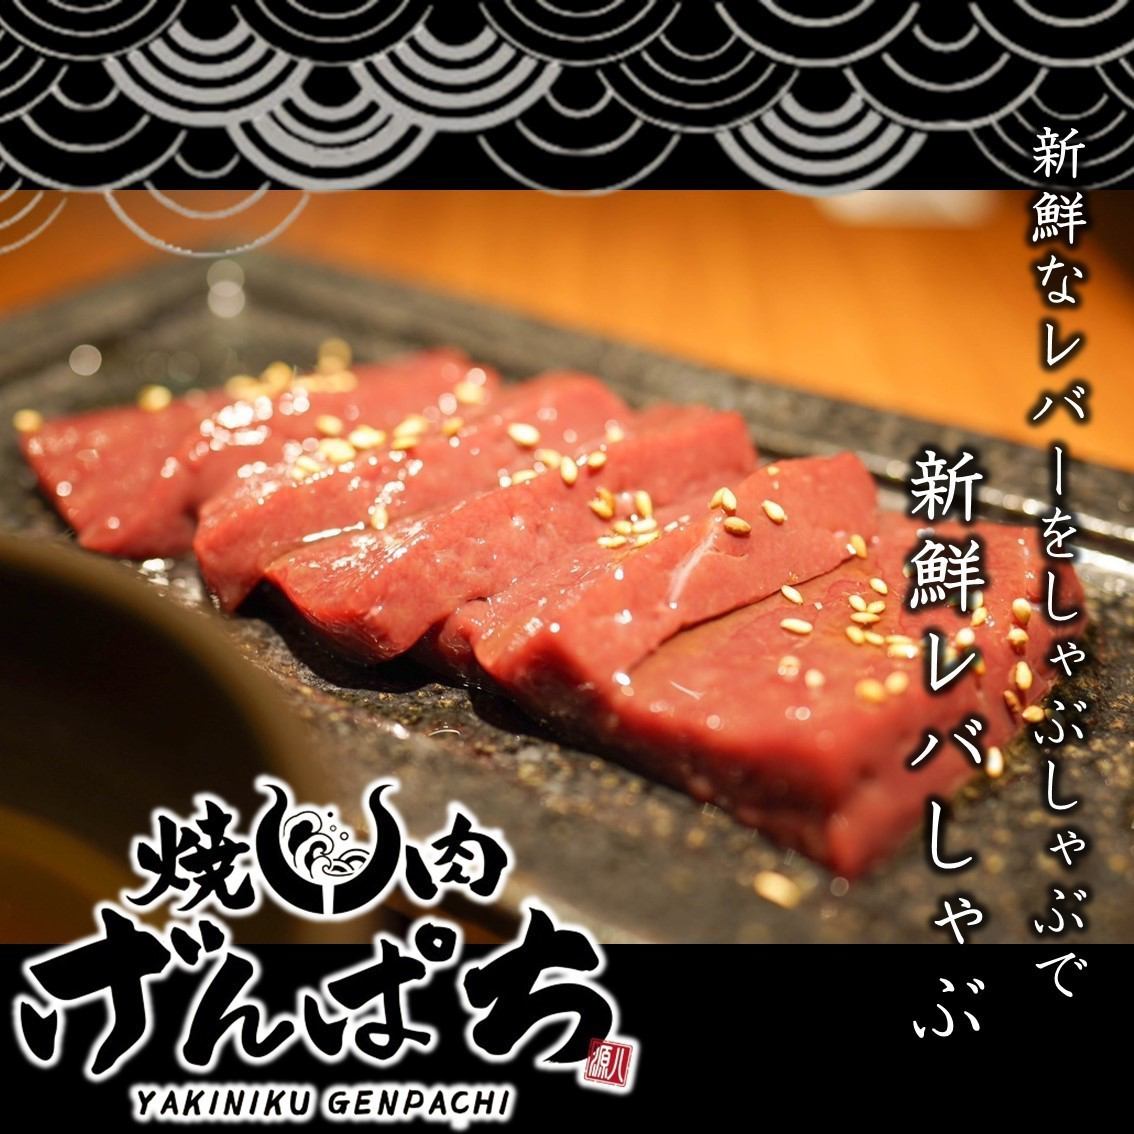 Reba-shabu, which is fresh liver shabu-shabu with sesame oil, is a must-try!